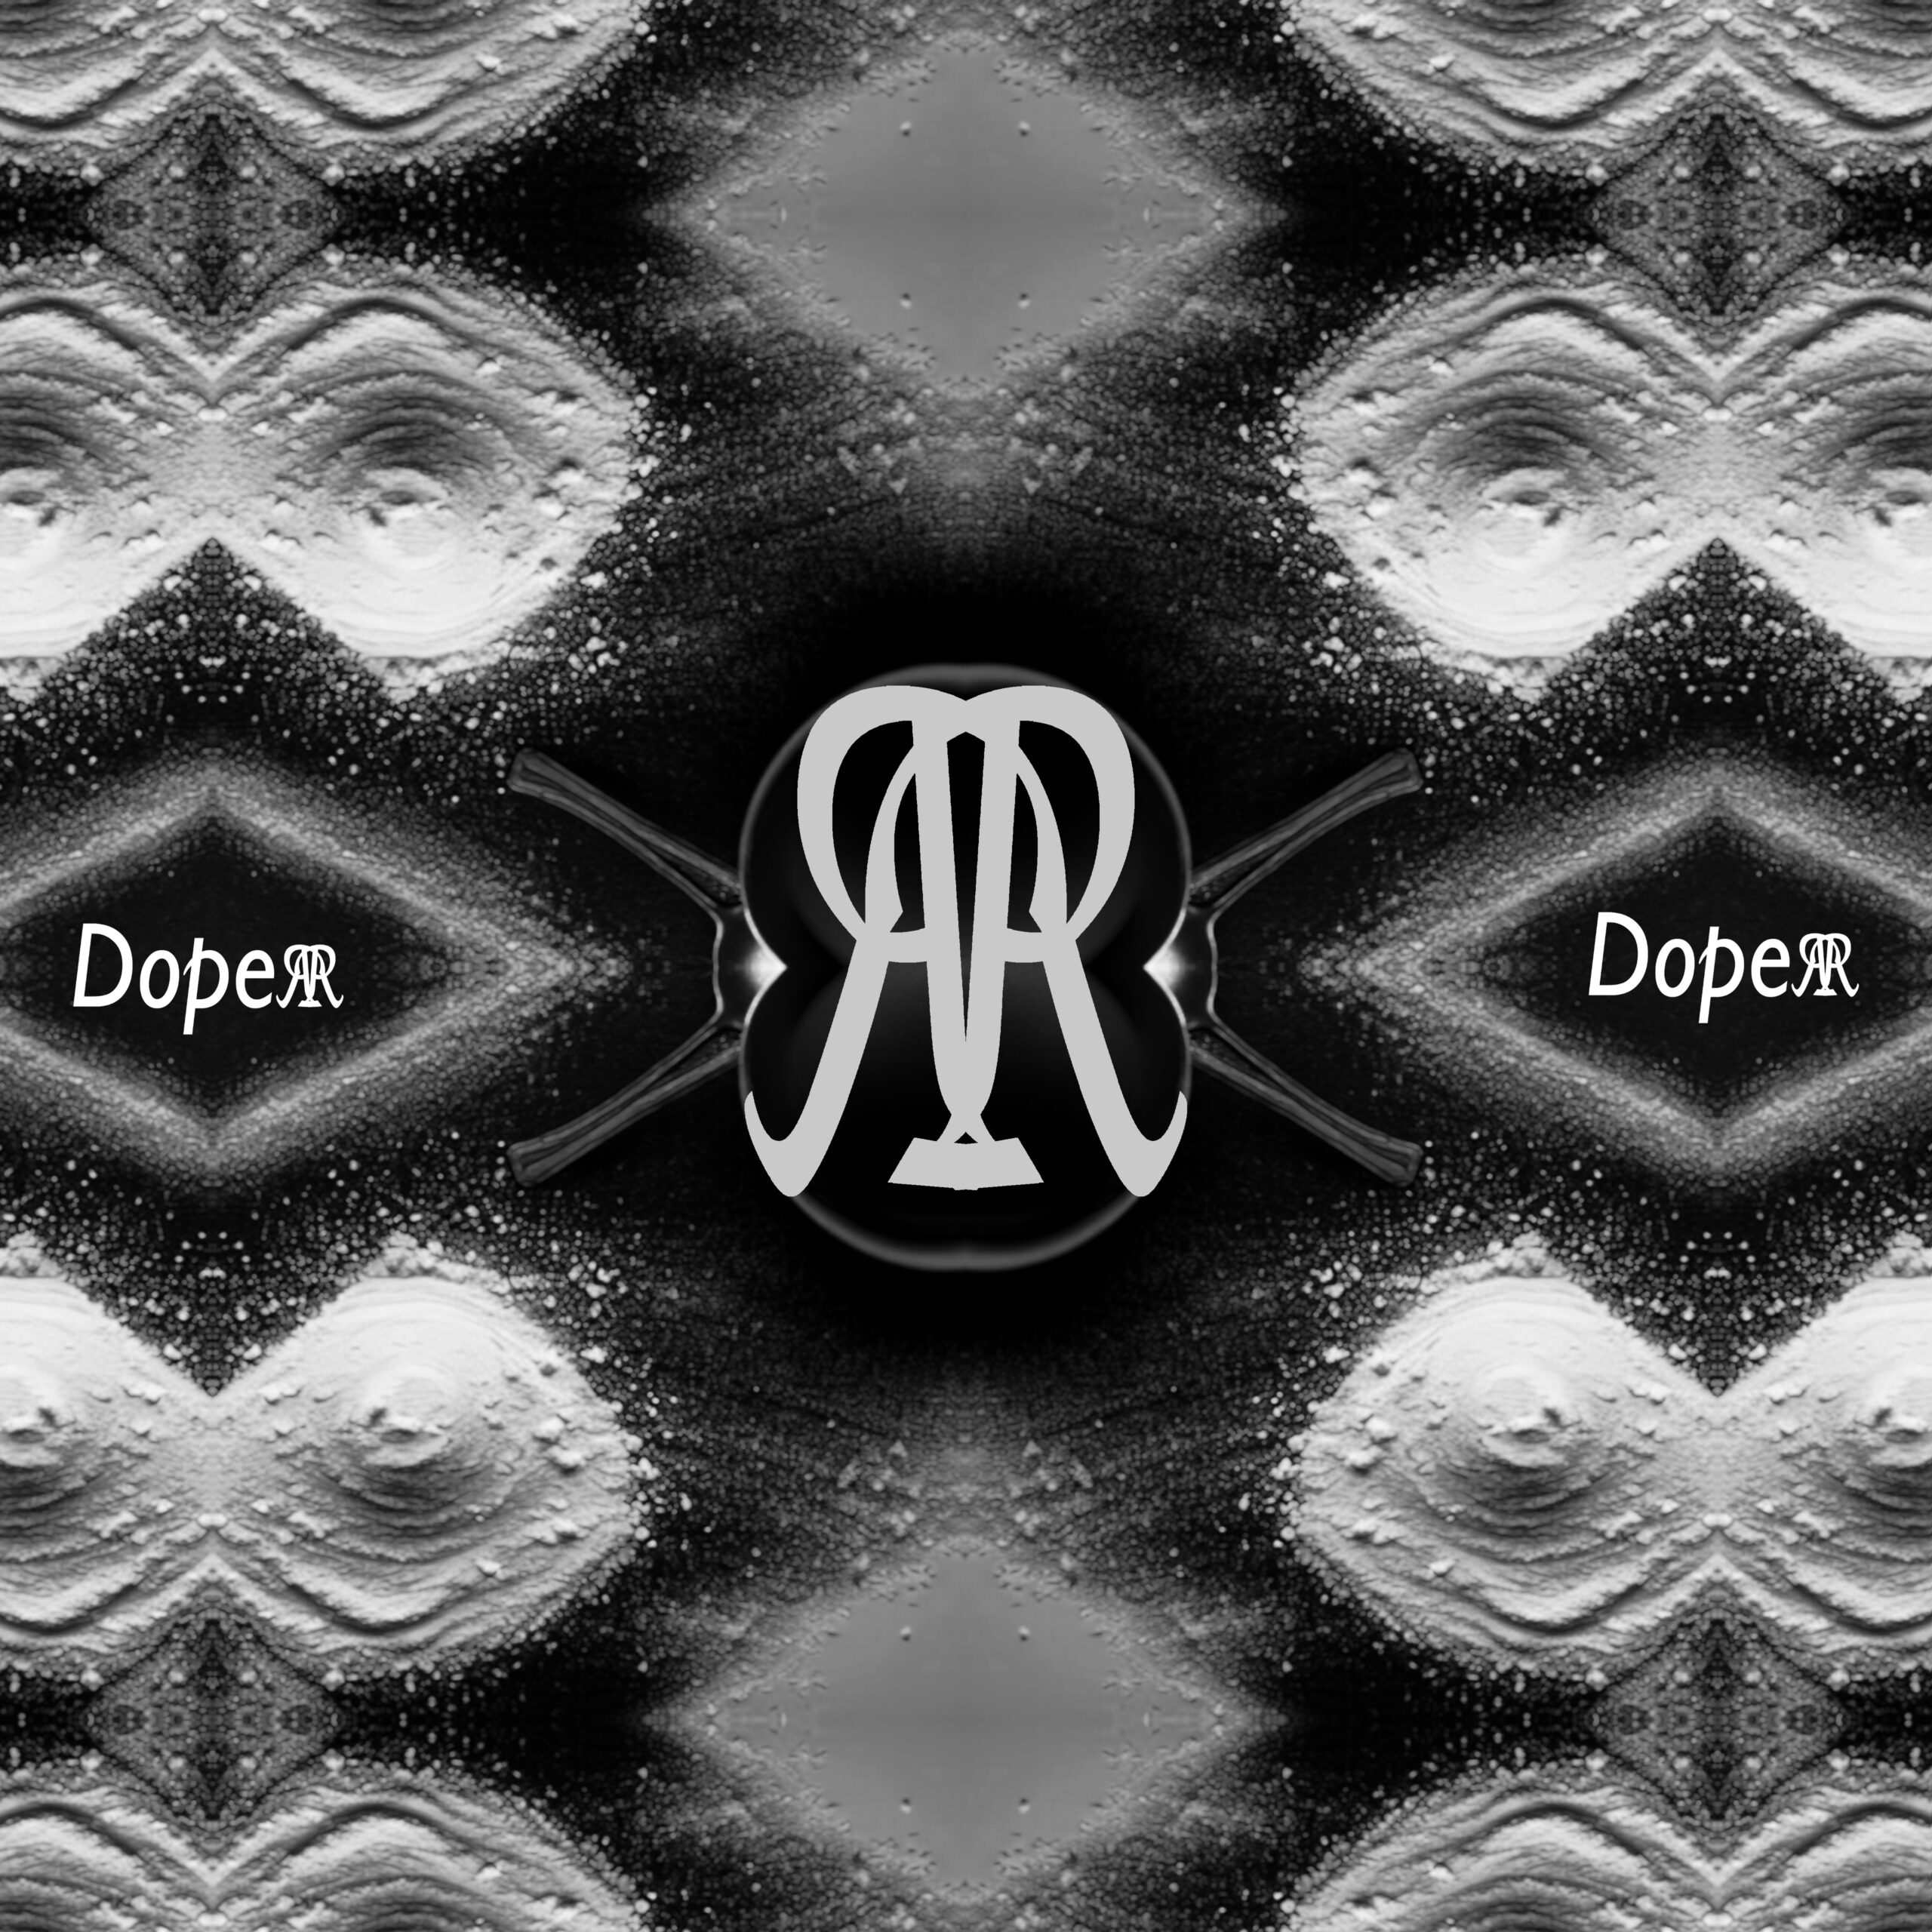 Garry With Two R's - Doper Cover Art Rap Hip Hop Trap Music Spotify Playlist